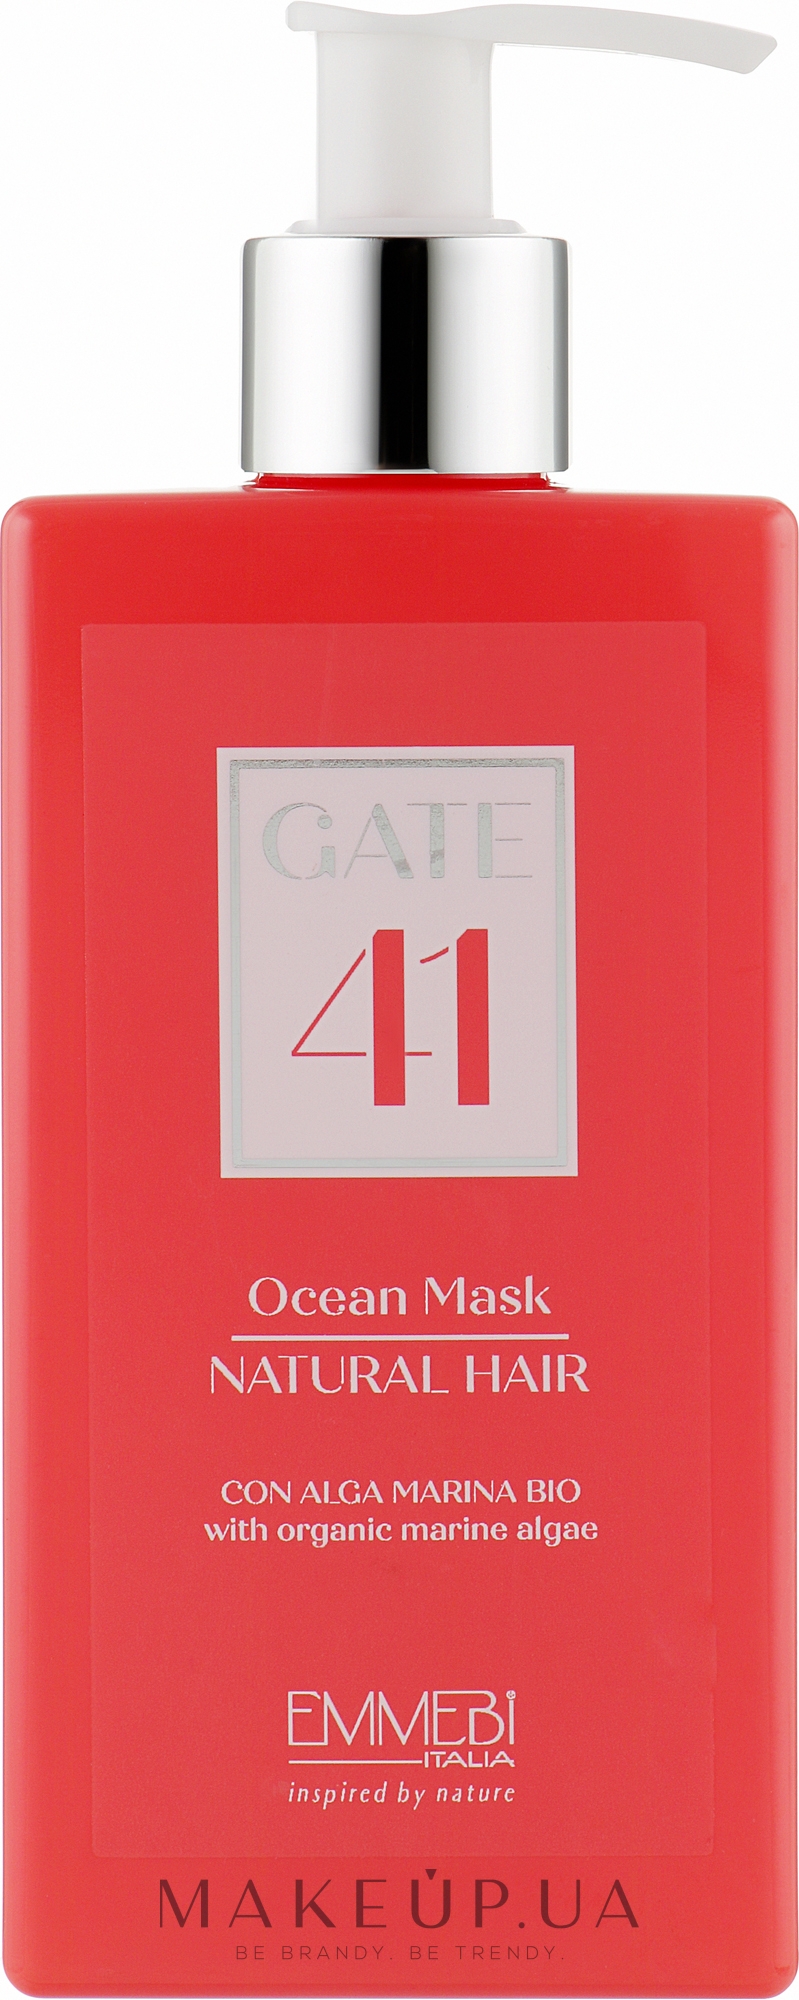 Маска для натуральных волос - Emmebi Italia Gate 41 Wash Ocean Mask Natural Hair — фото 200ml